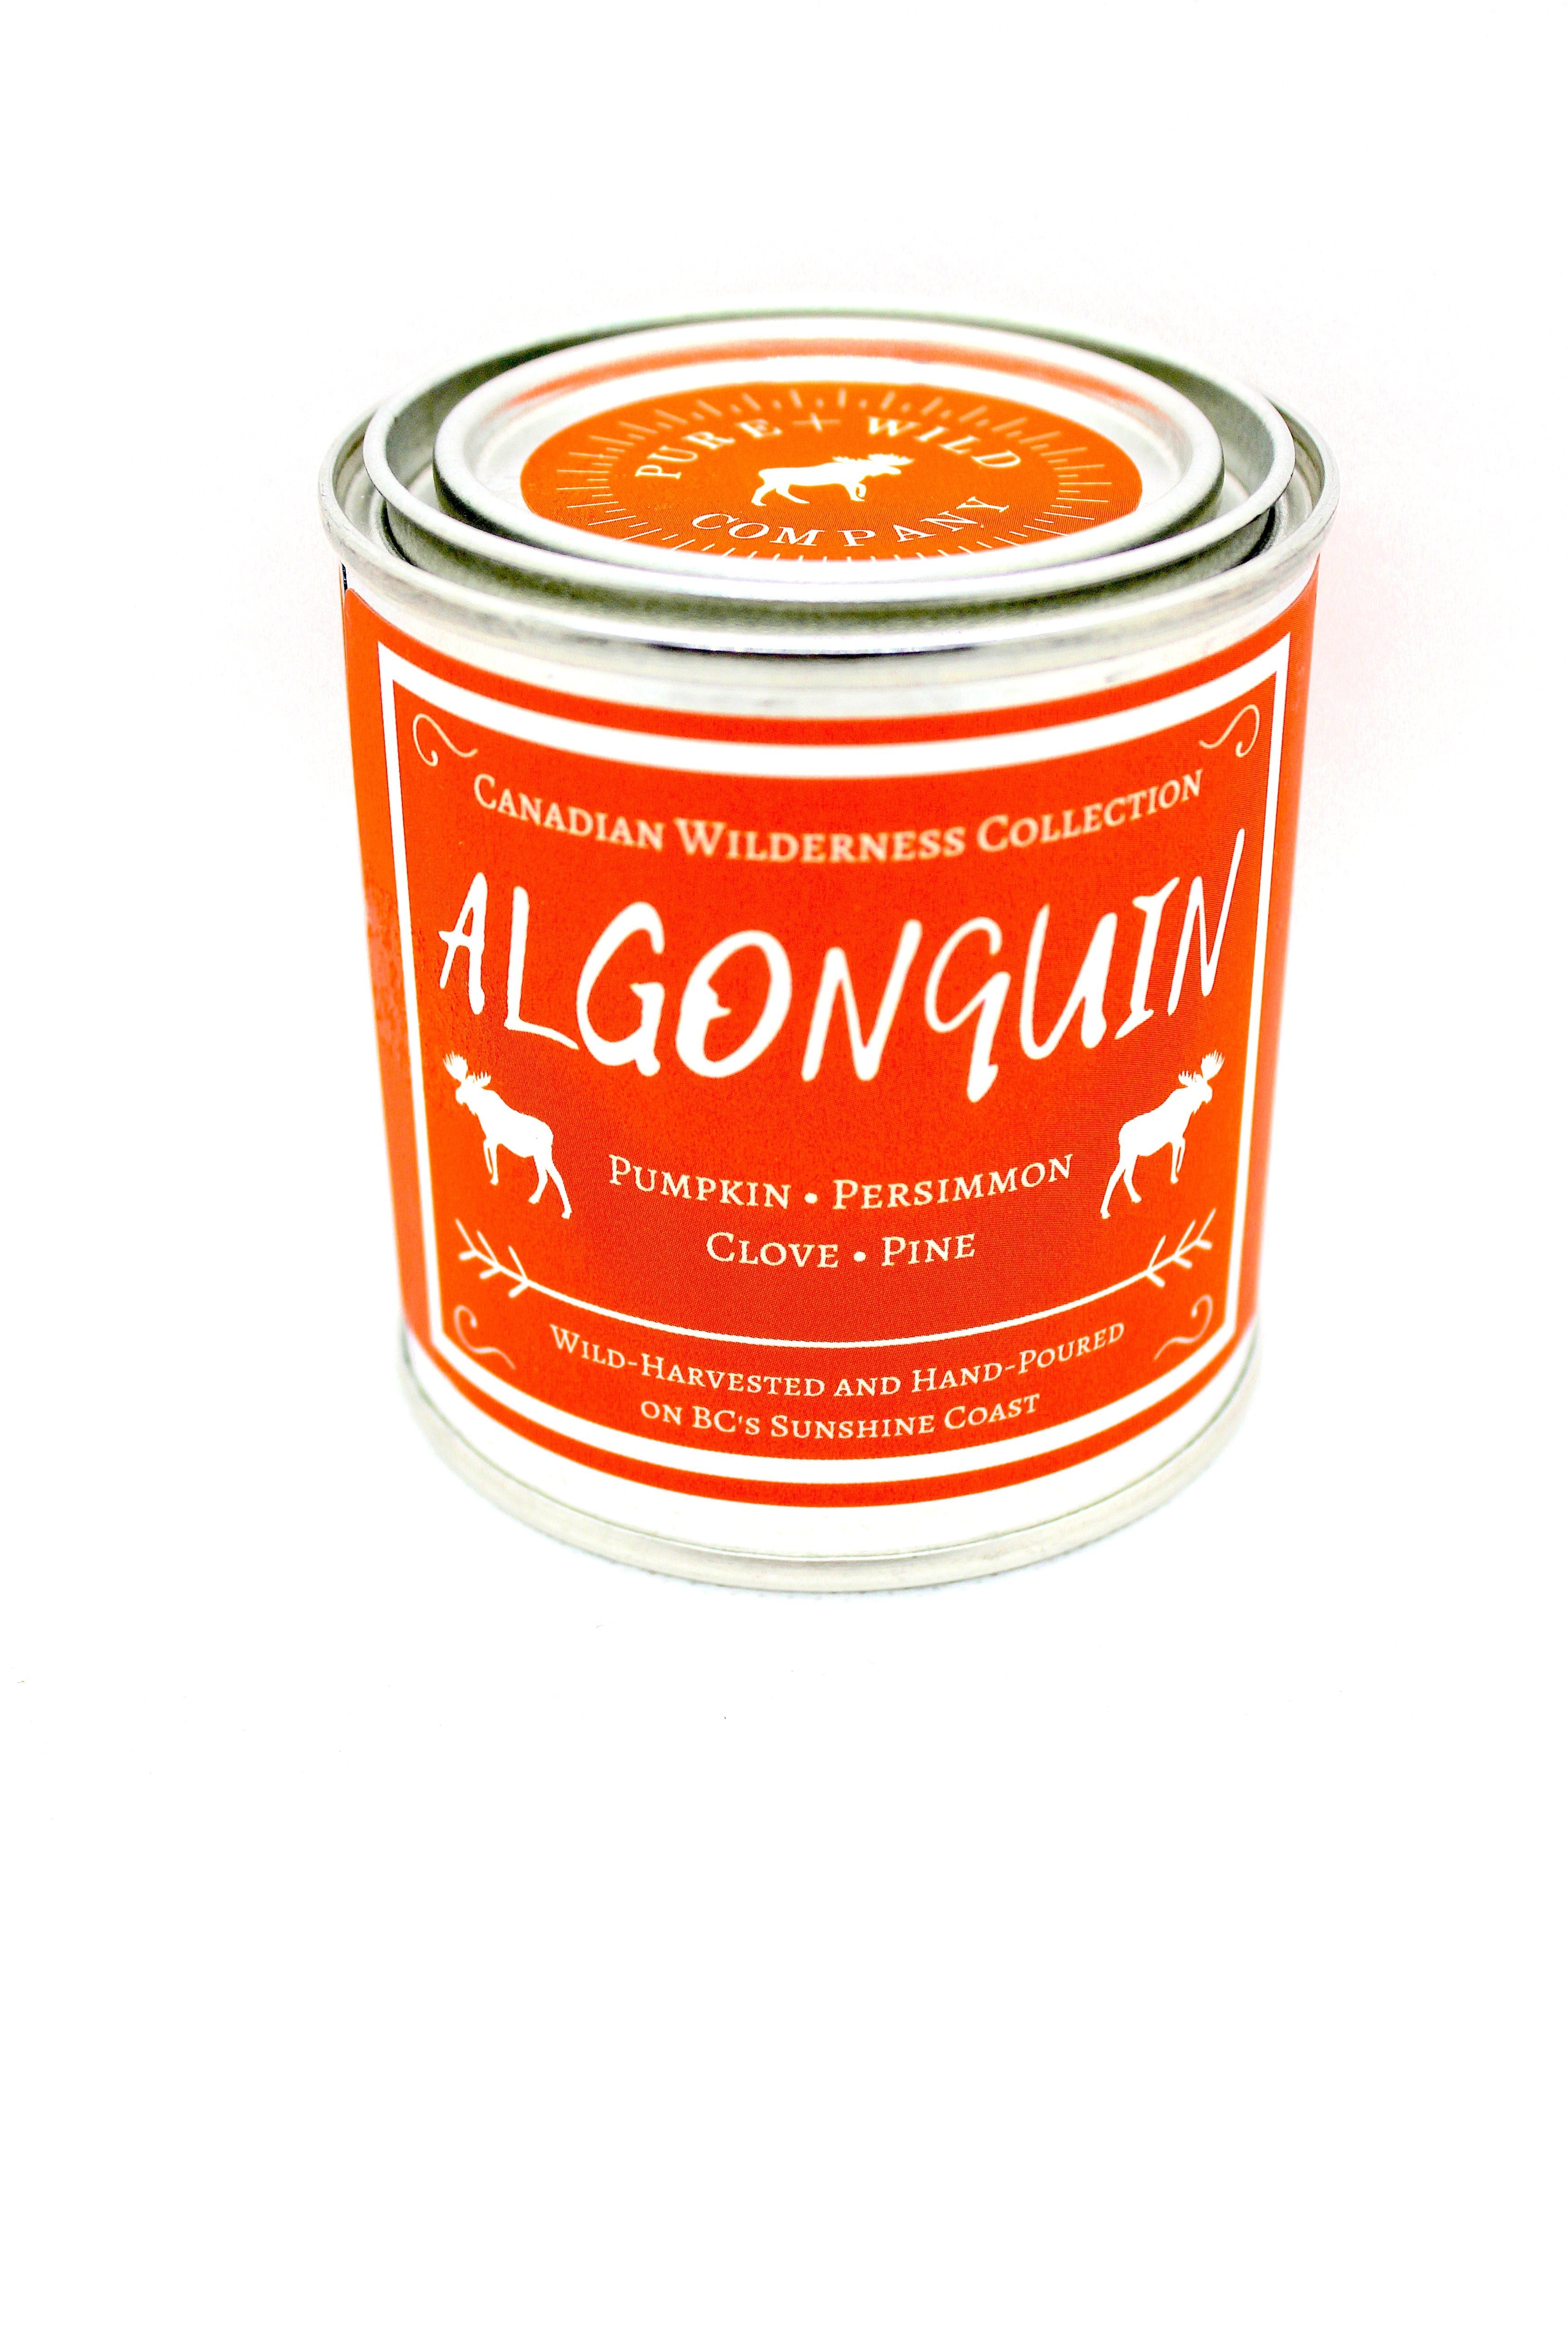 ALGONGUIN - Pumpkin, Persimmon, Clove, Pine PURE + WILD CO. 